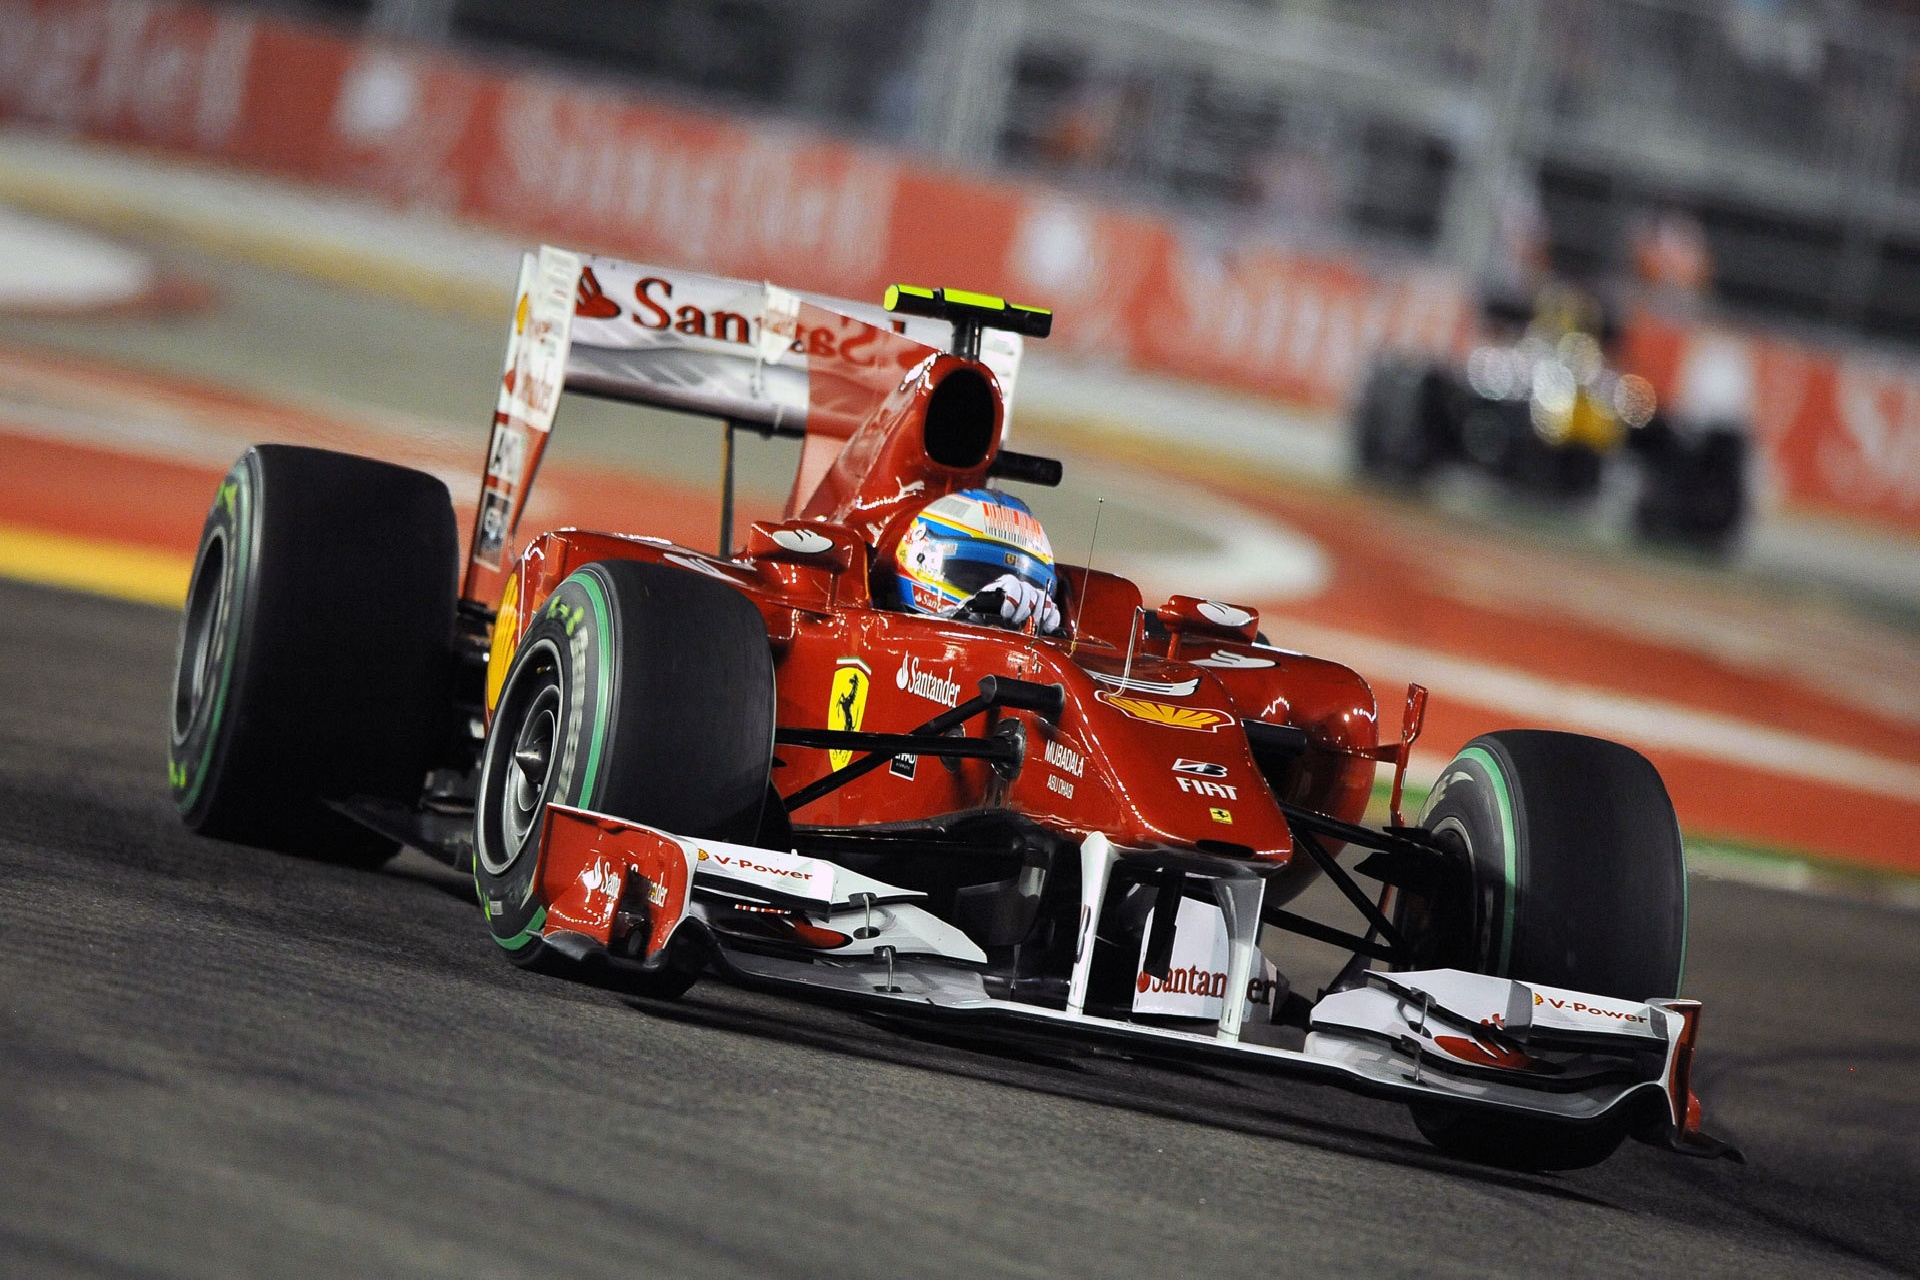 Картинки формула 1. Феррари f1 2010. Ferrari f10 f1. Гоночный Болид Феррари формула 1. Grand prix f1.